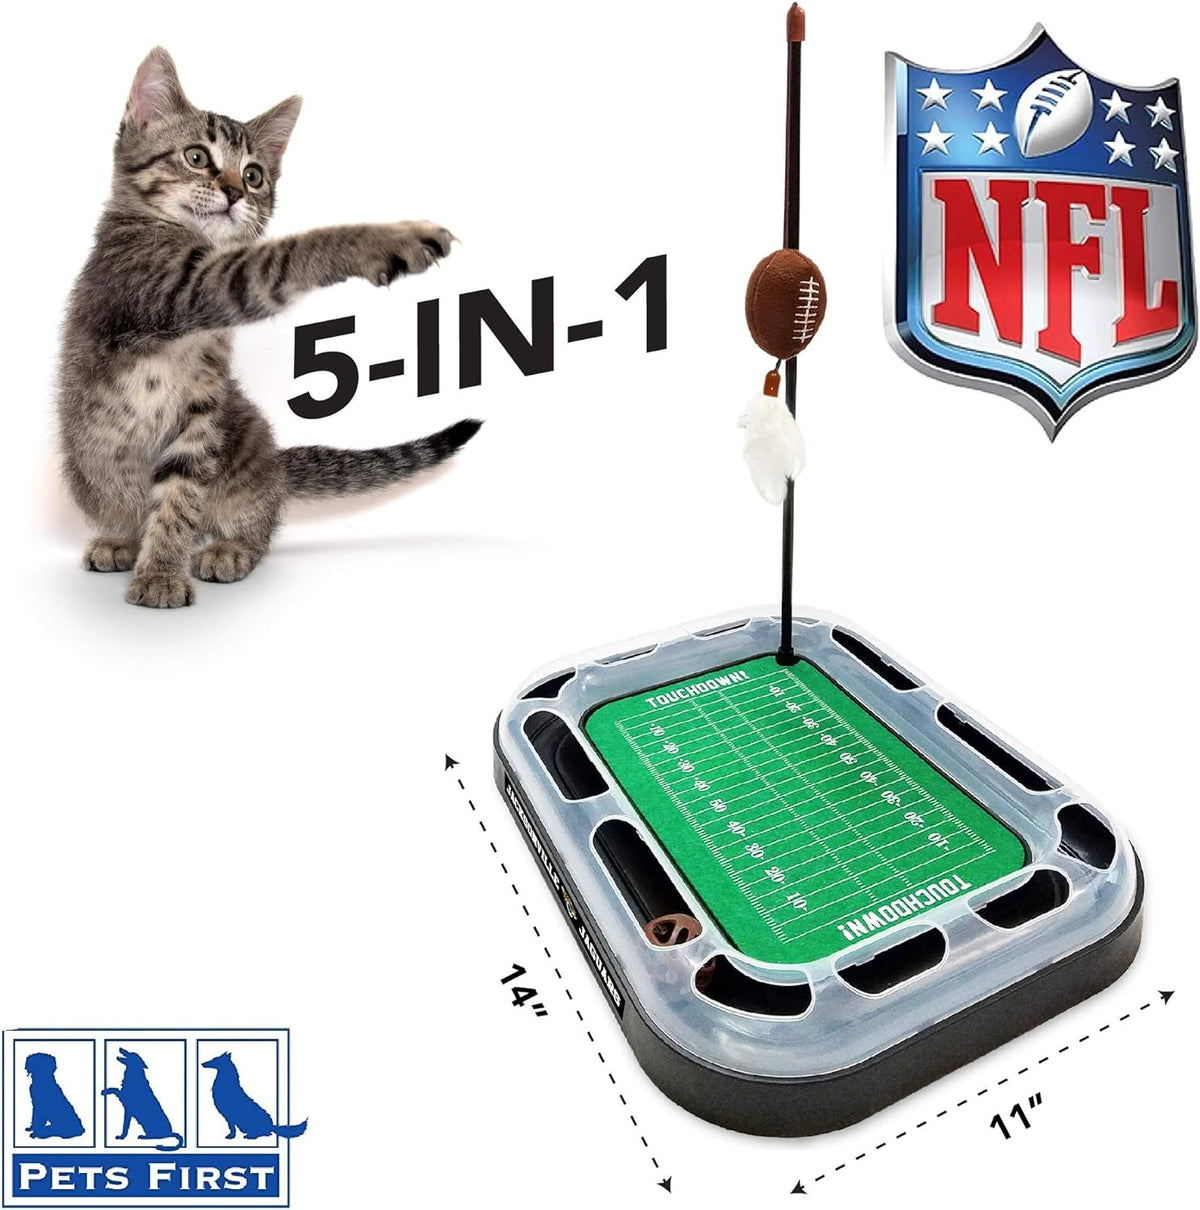 Jacksonville Jaguars Football Cat Scratcher Toy